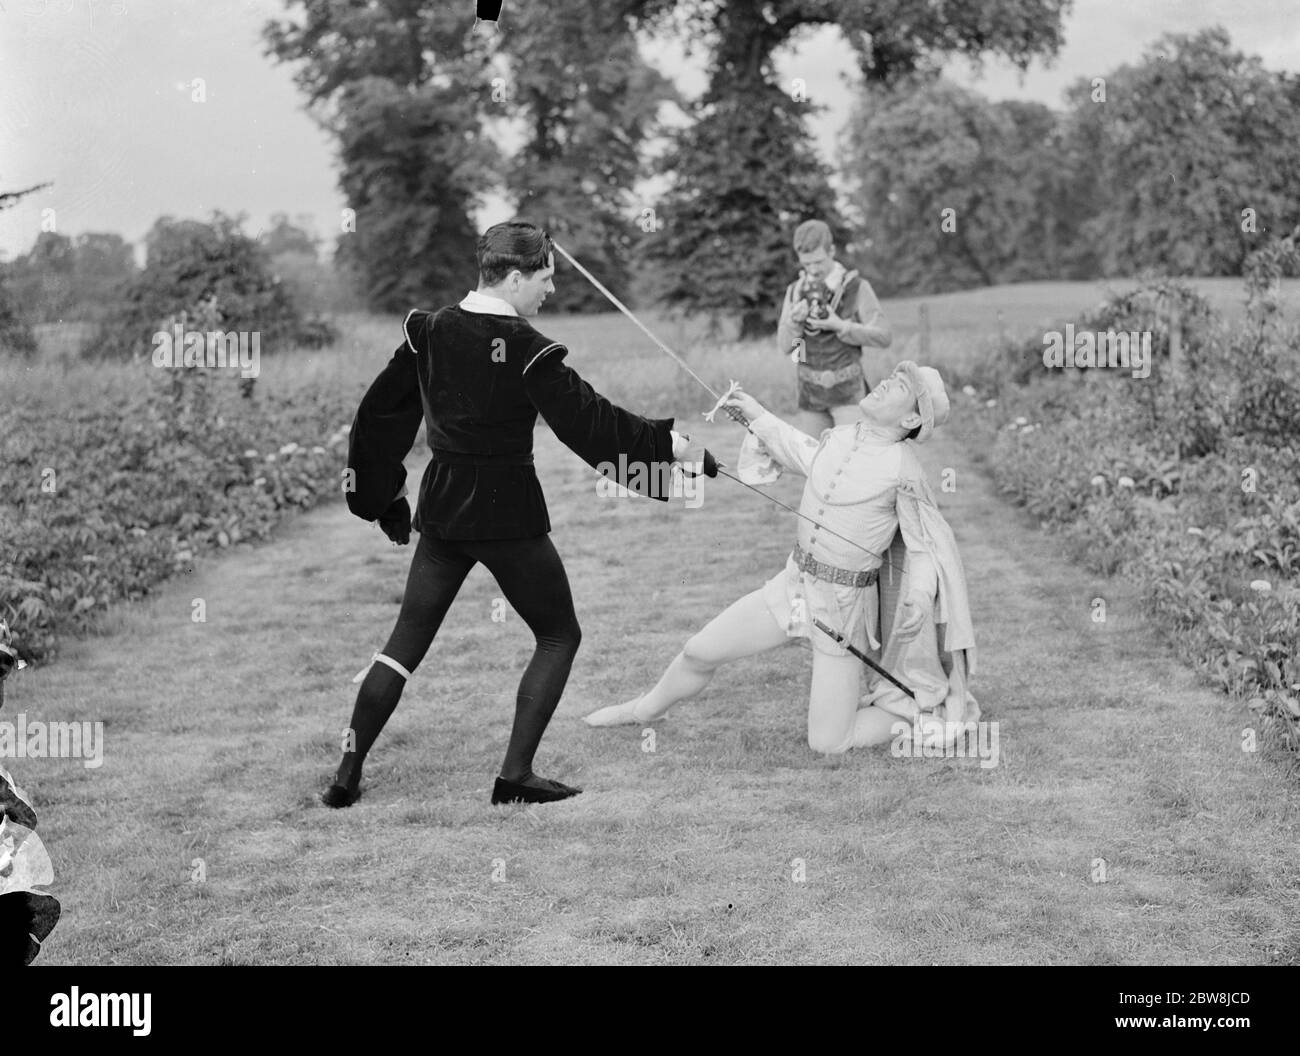 Romeo und Julia, Kerwin Spieler, Eltham. 1937 Stockfoto